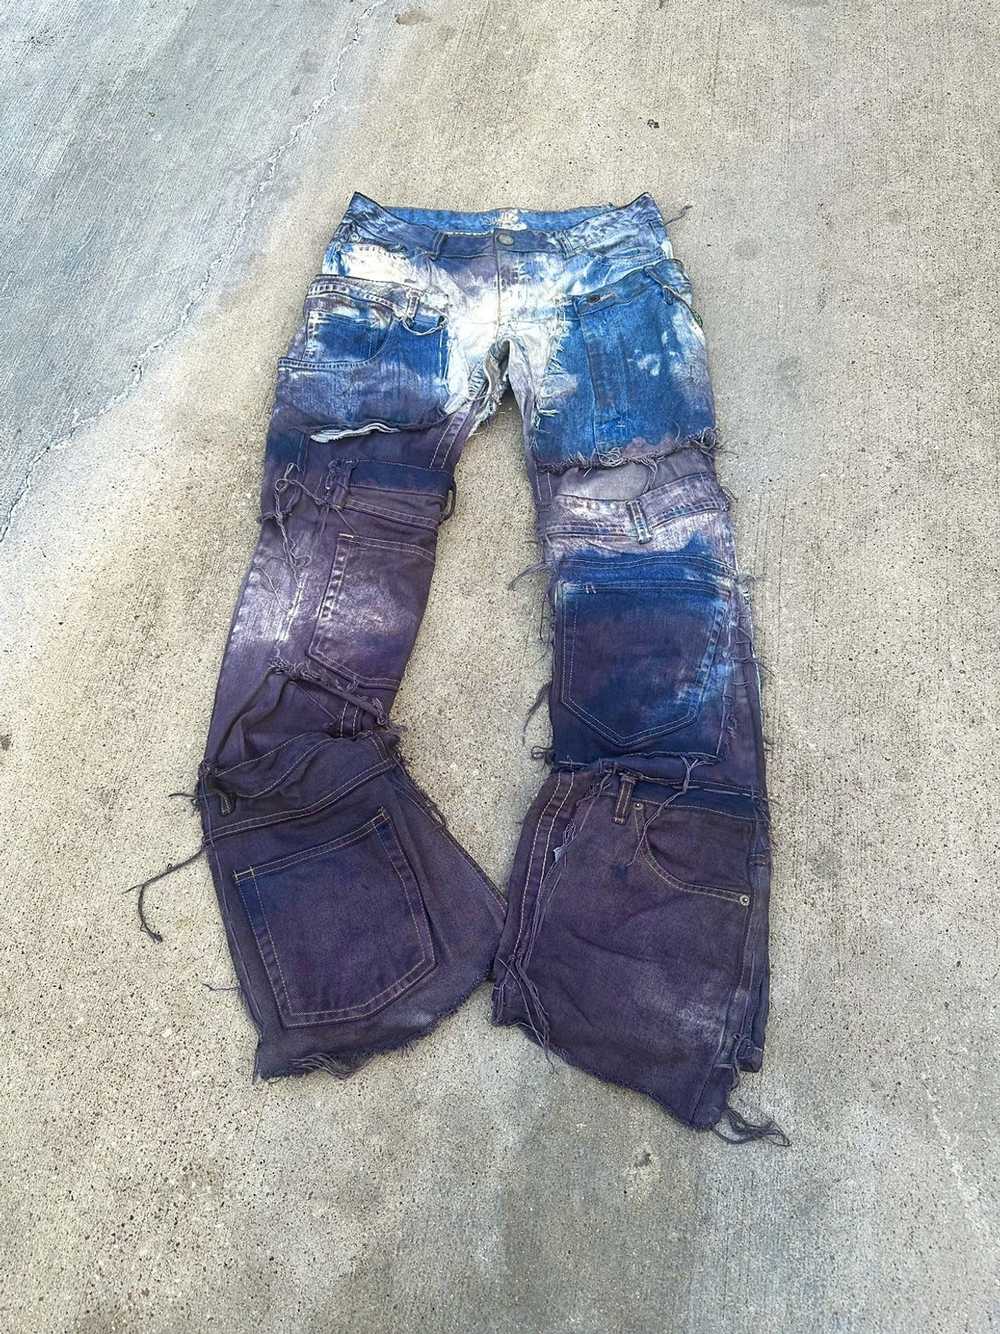 Custom × Handmade Dirty Dancer Pants - image 1